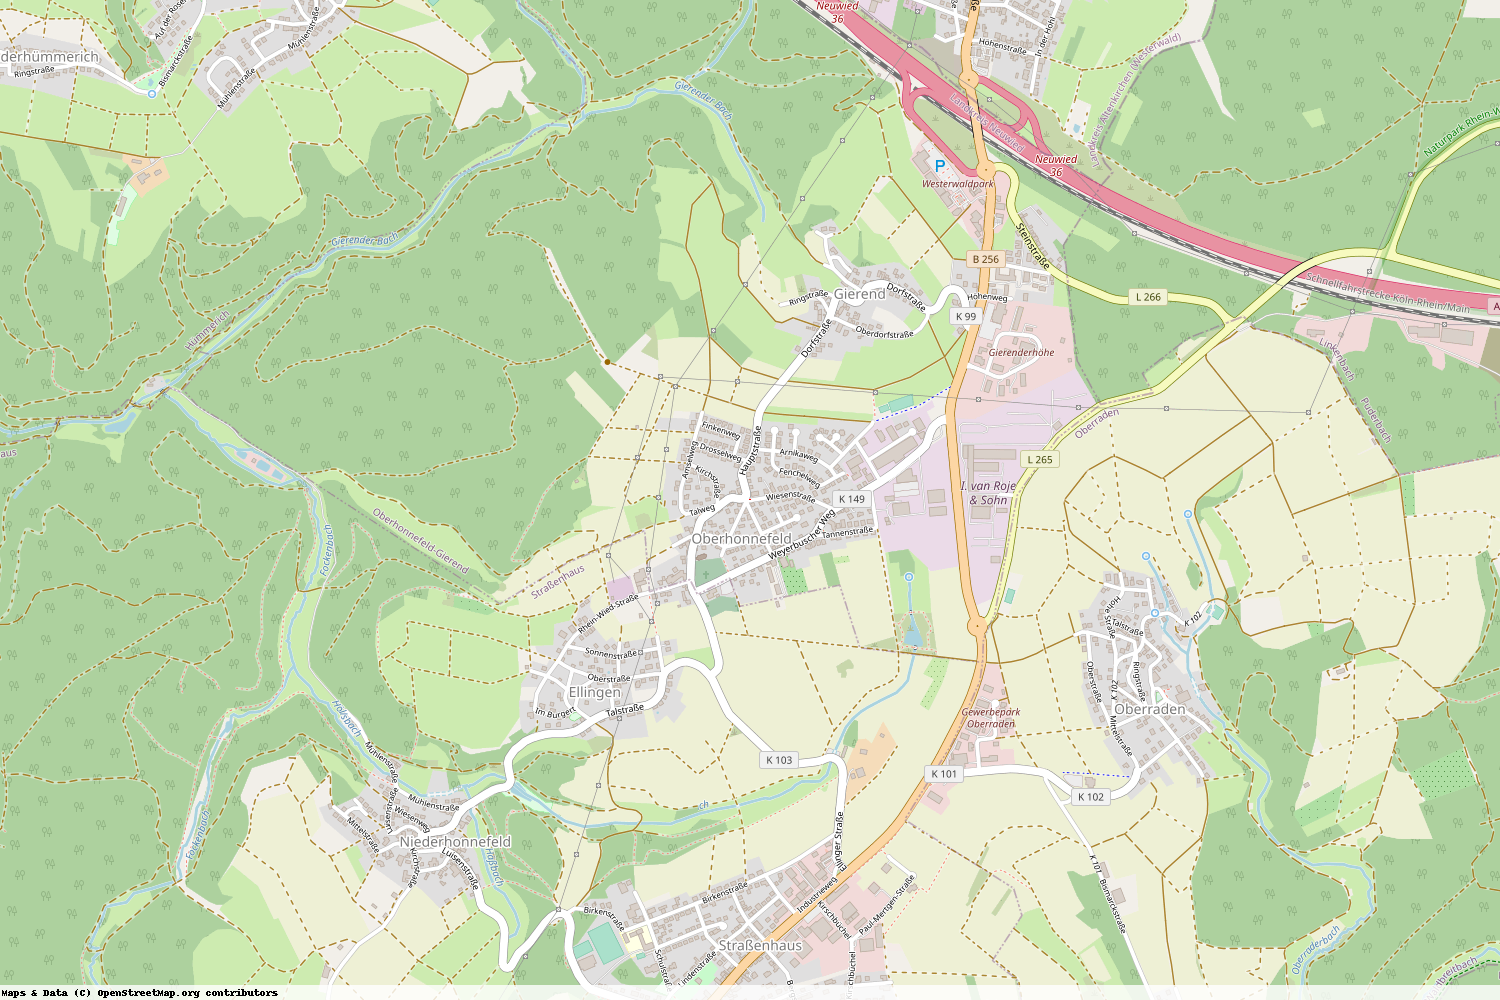 Ist gerade Stromausfall in Rheinland-Pfalz - Neuwied - Oberhonnefeld-Gierend?